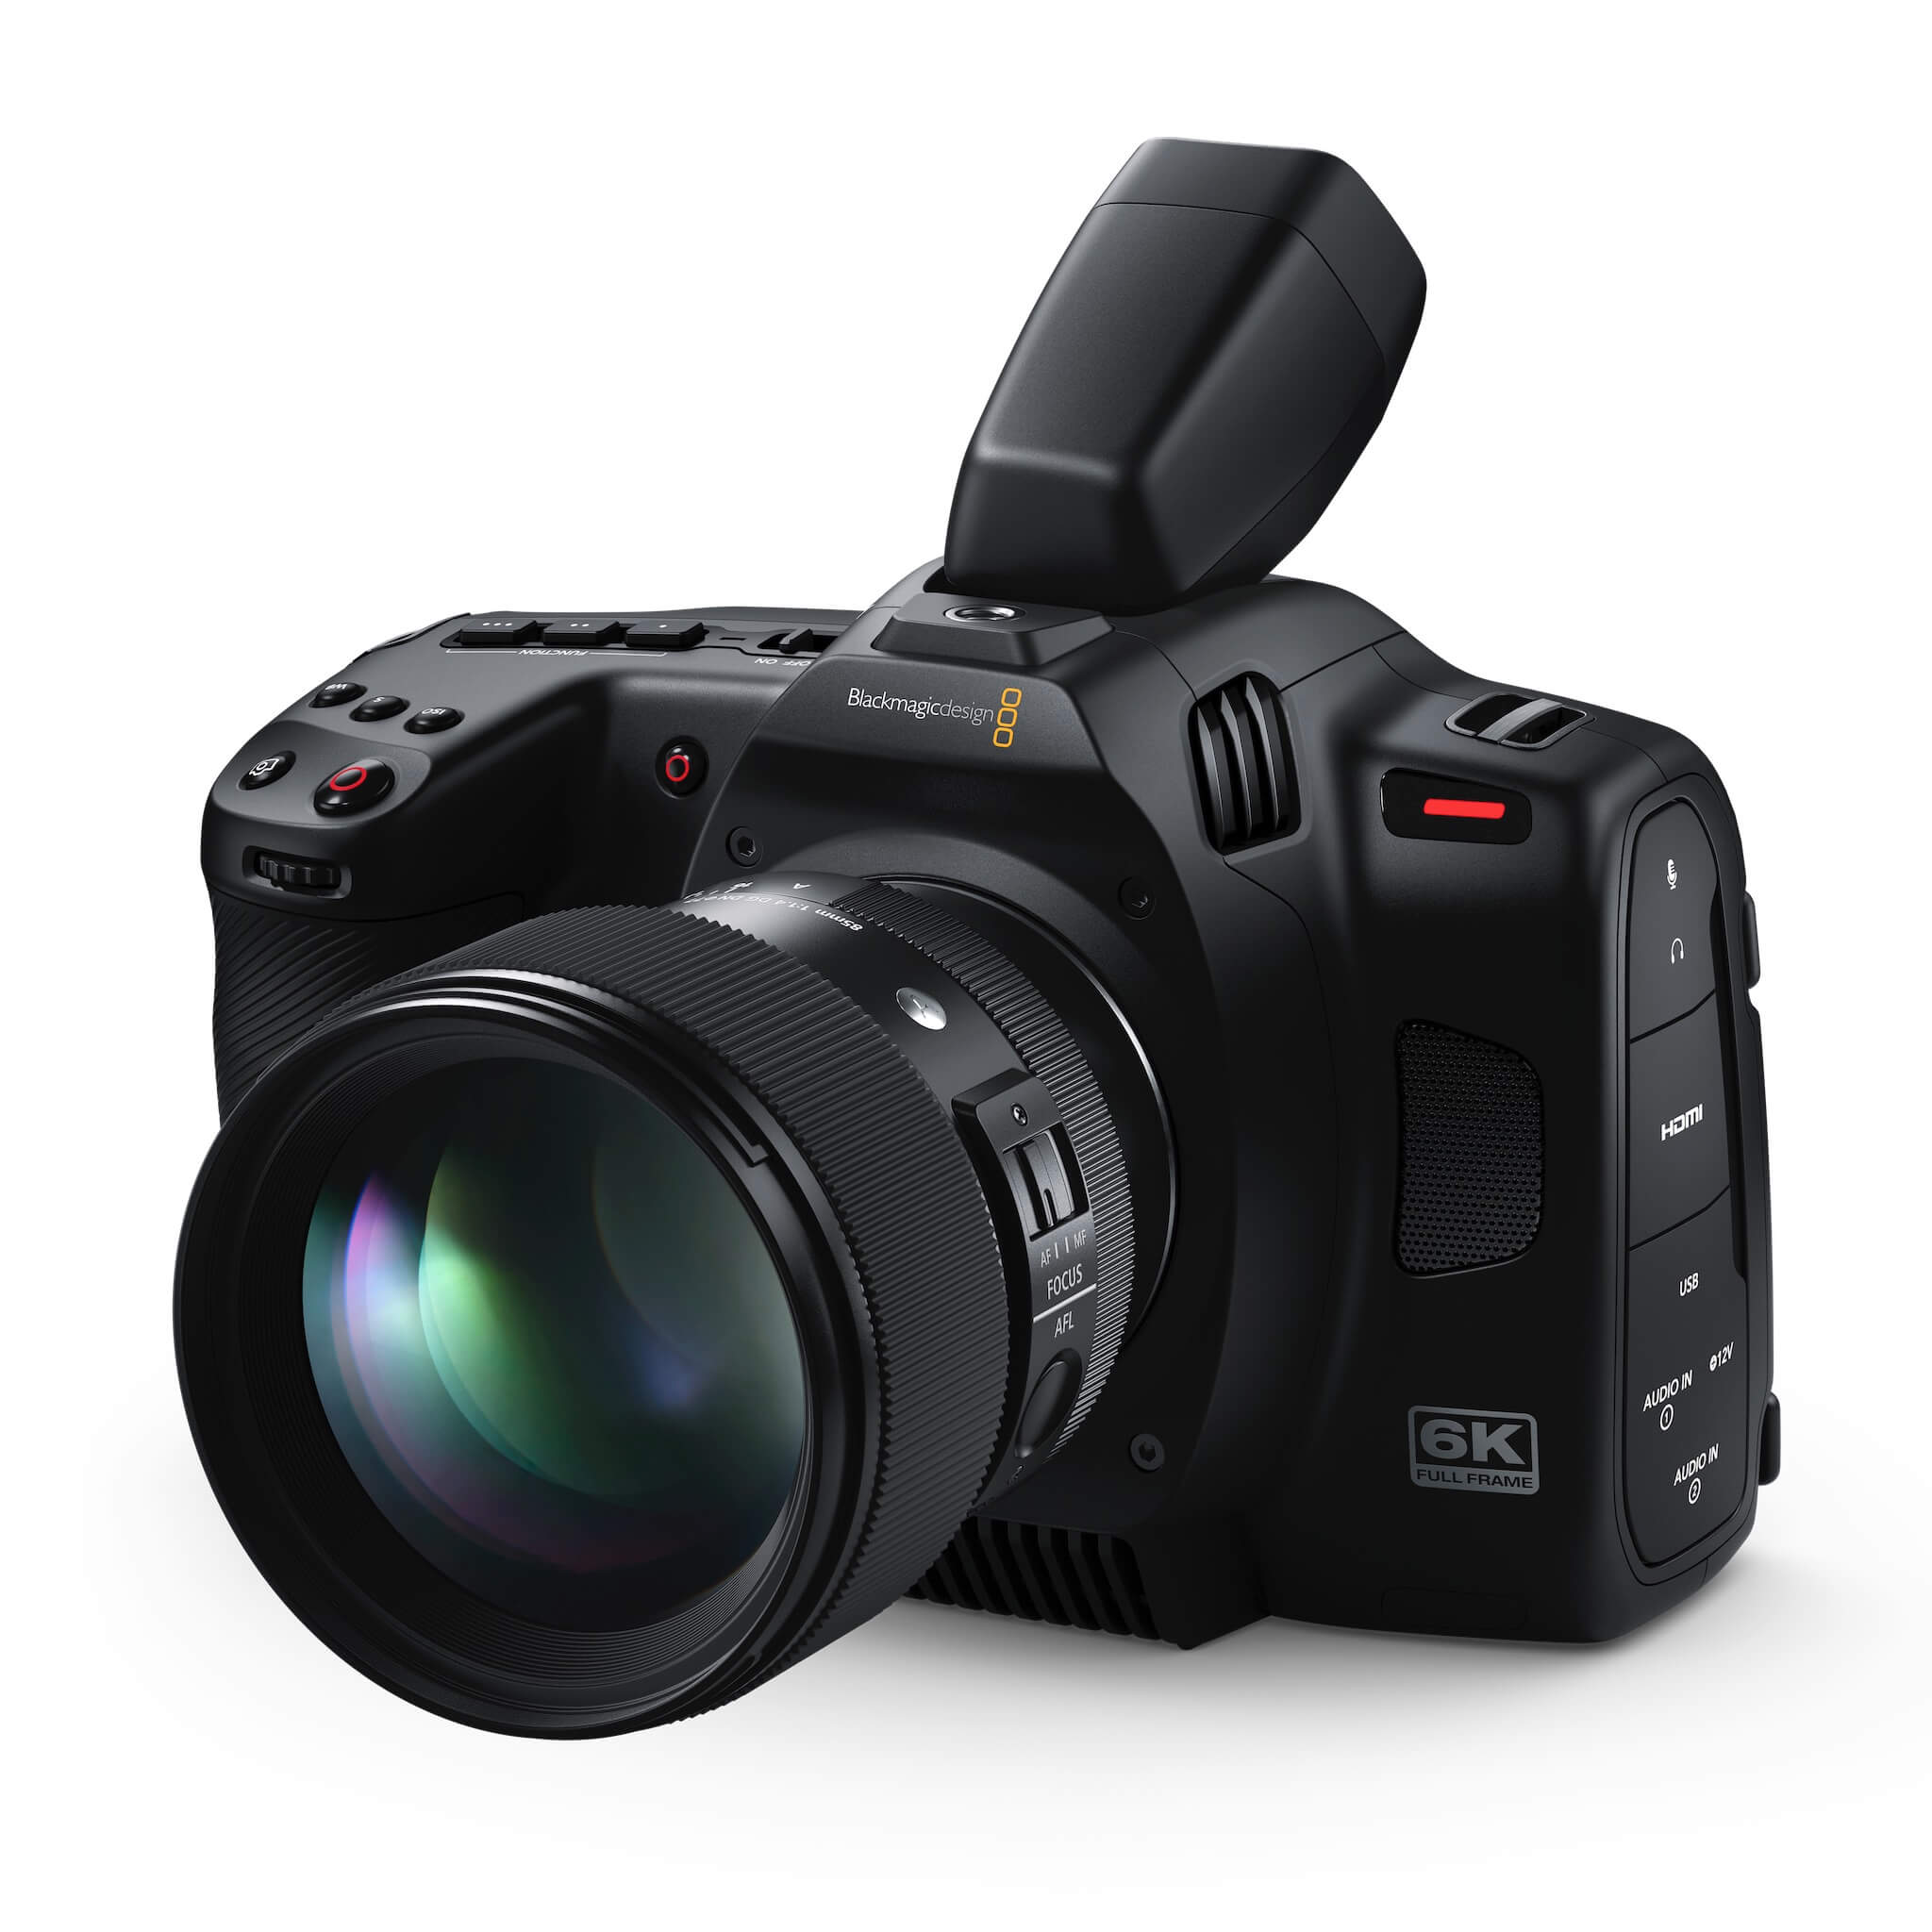 Blackmagic Design Cinema Camera 6K, front – optional equipment shown